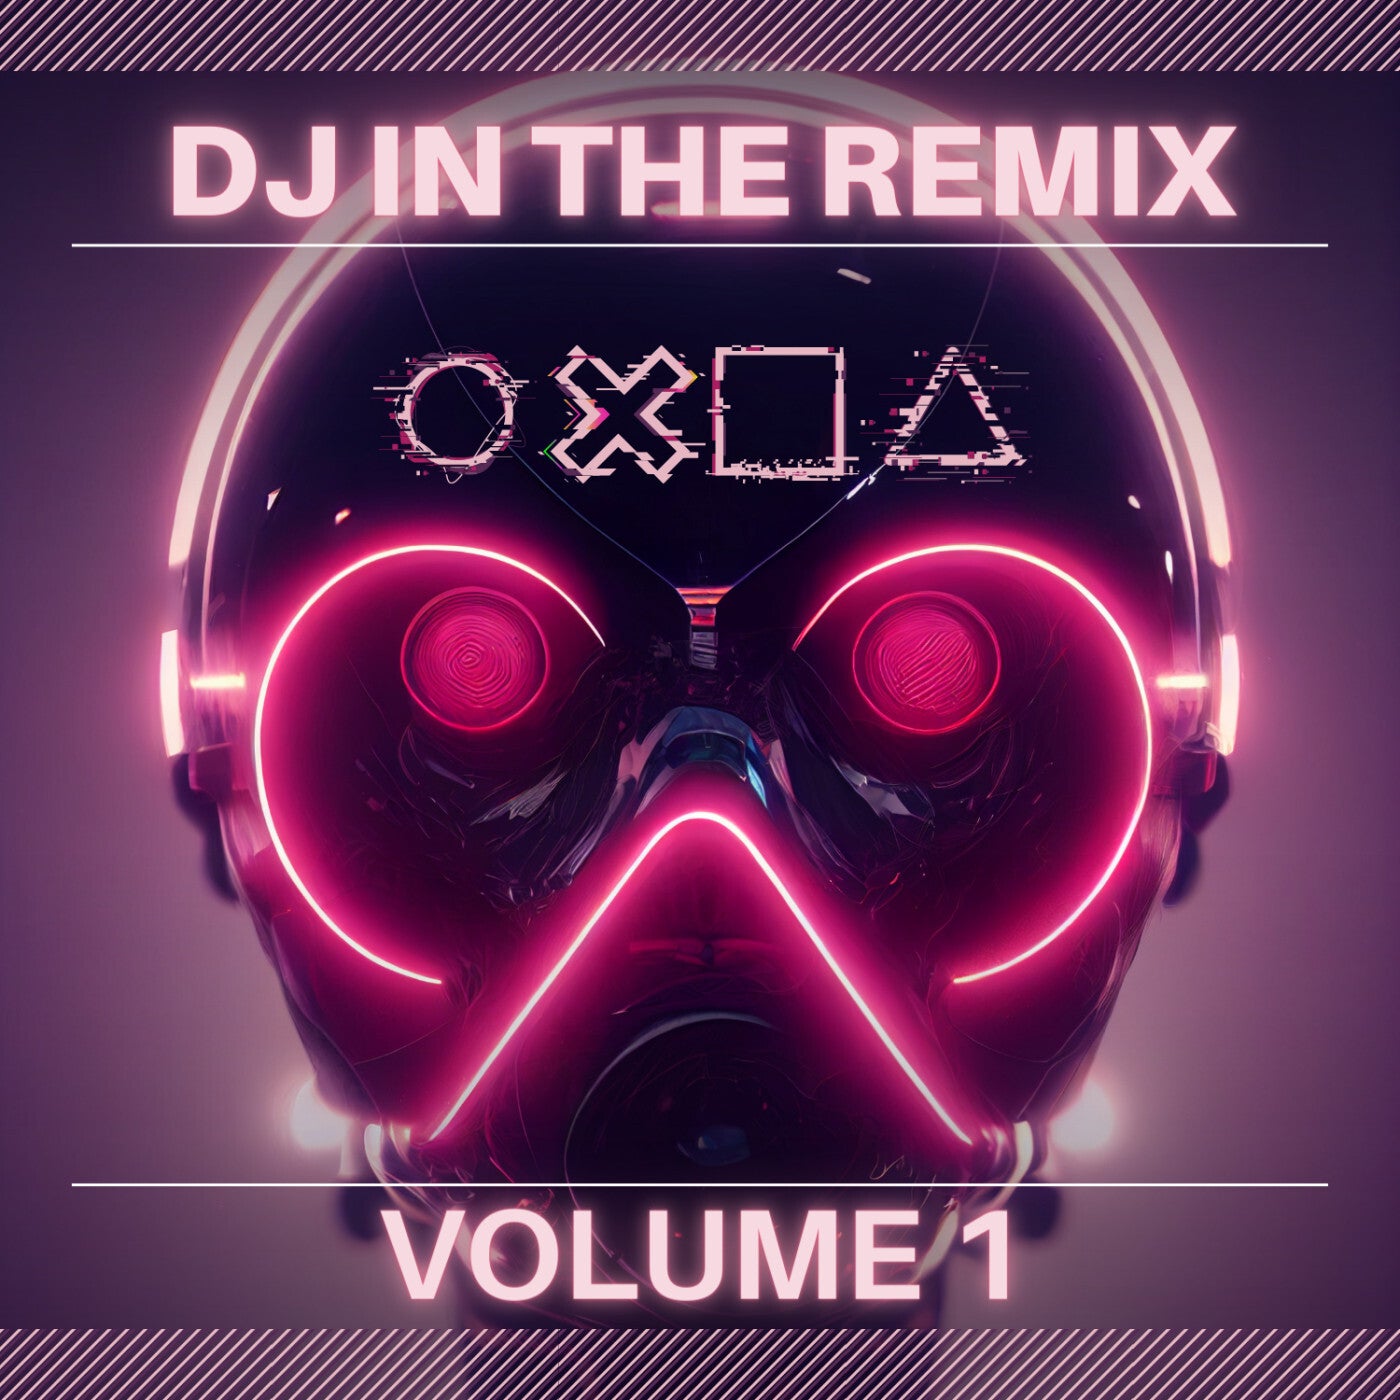 DJ In The Remix - Volume 1